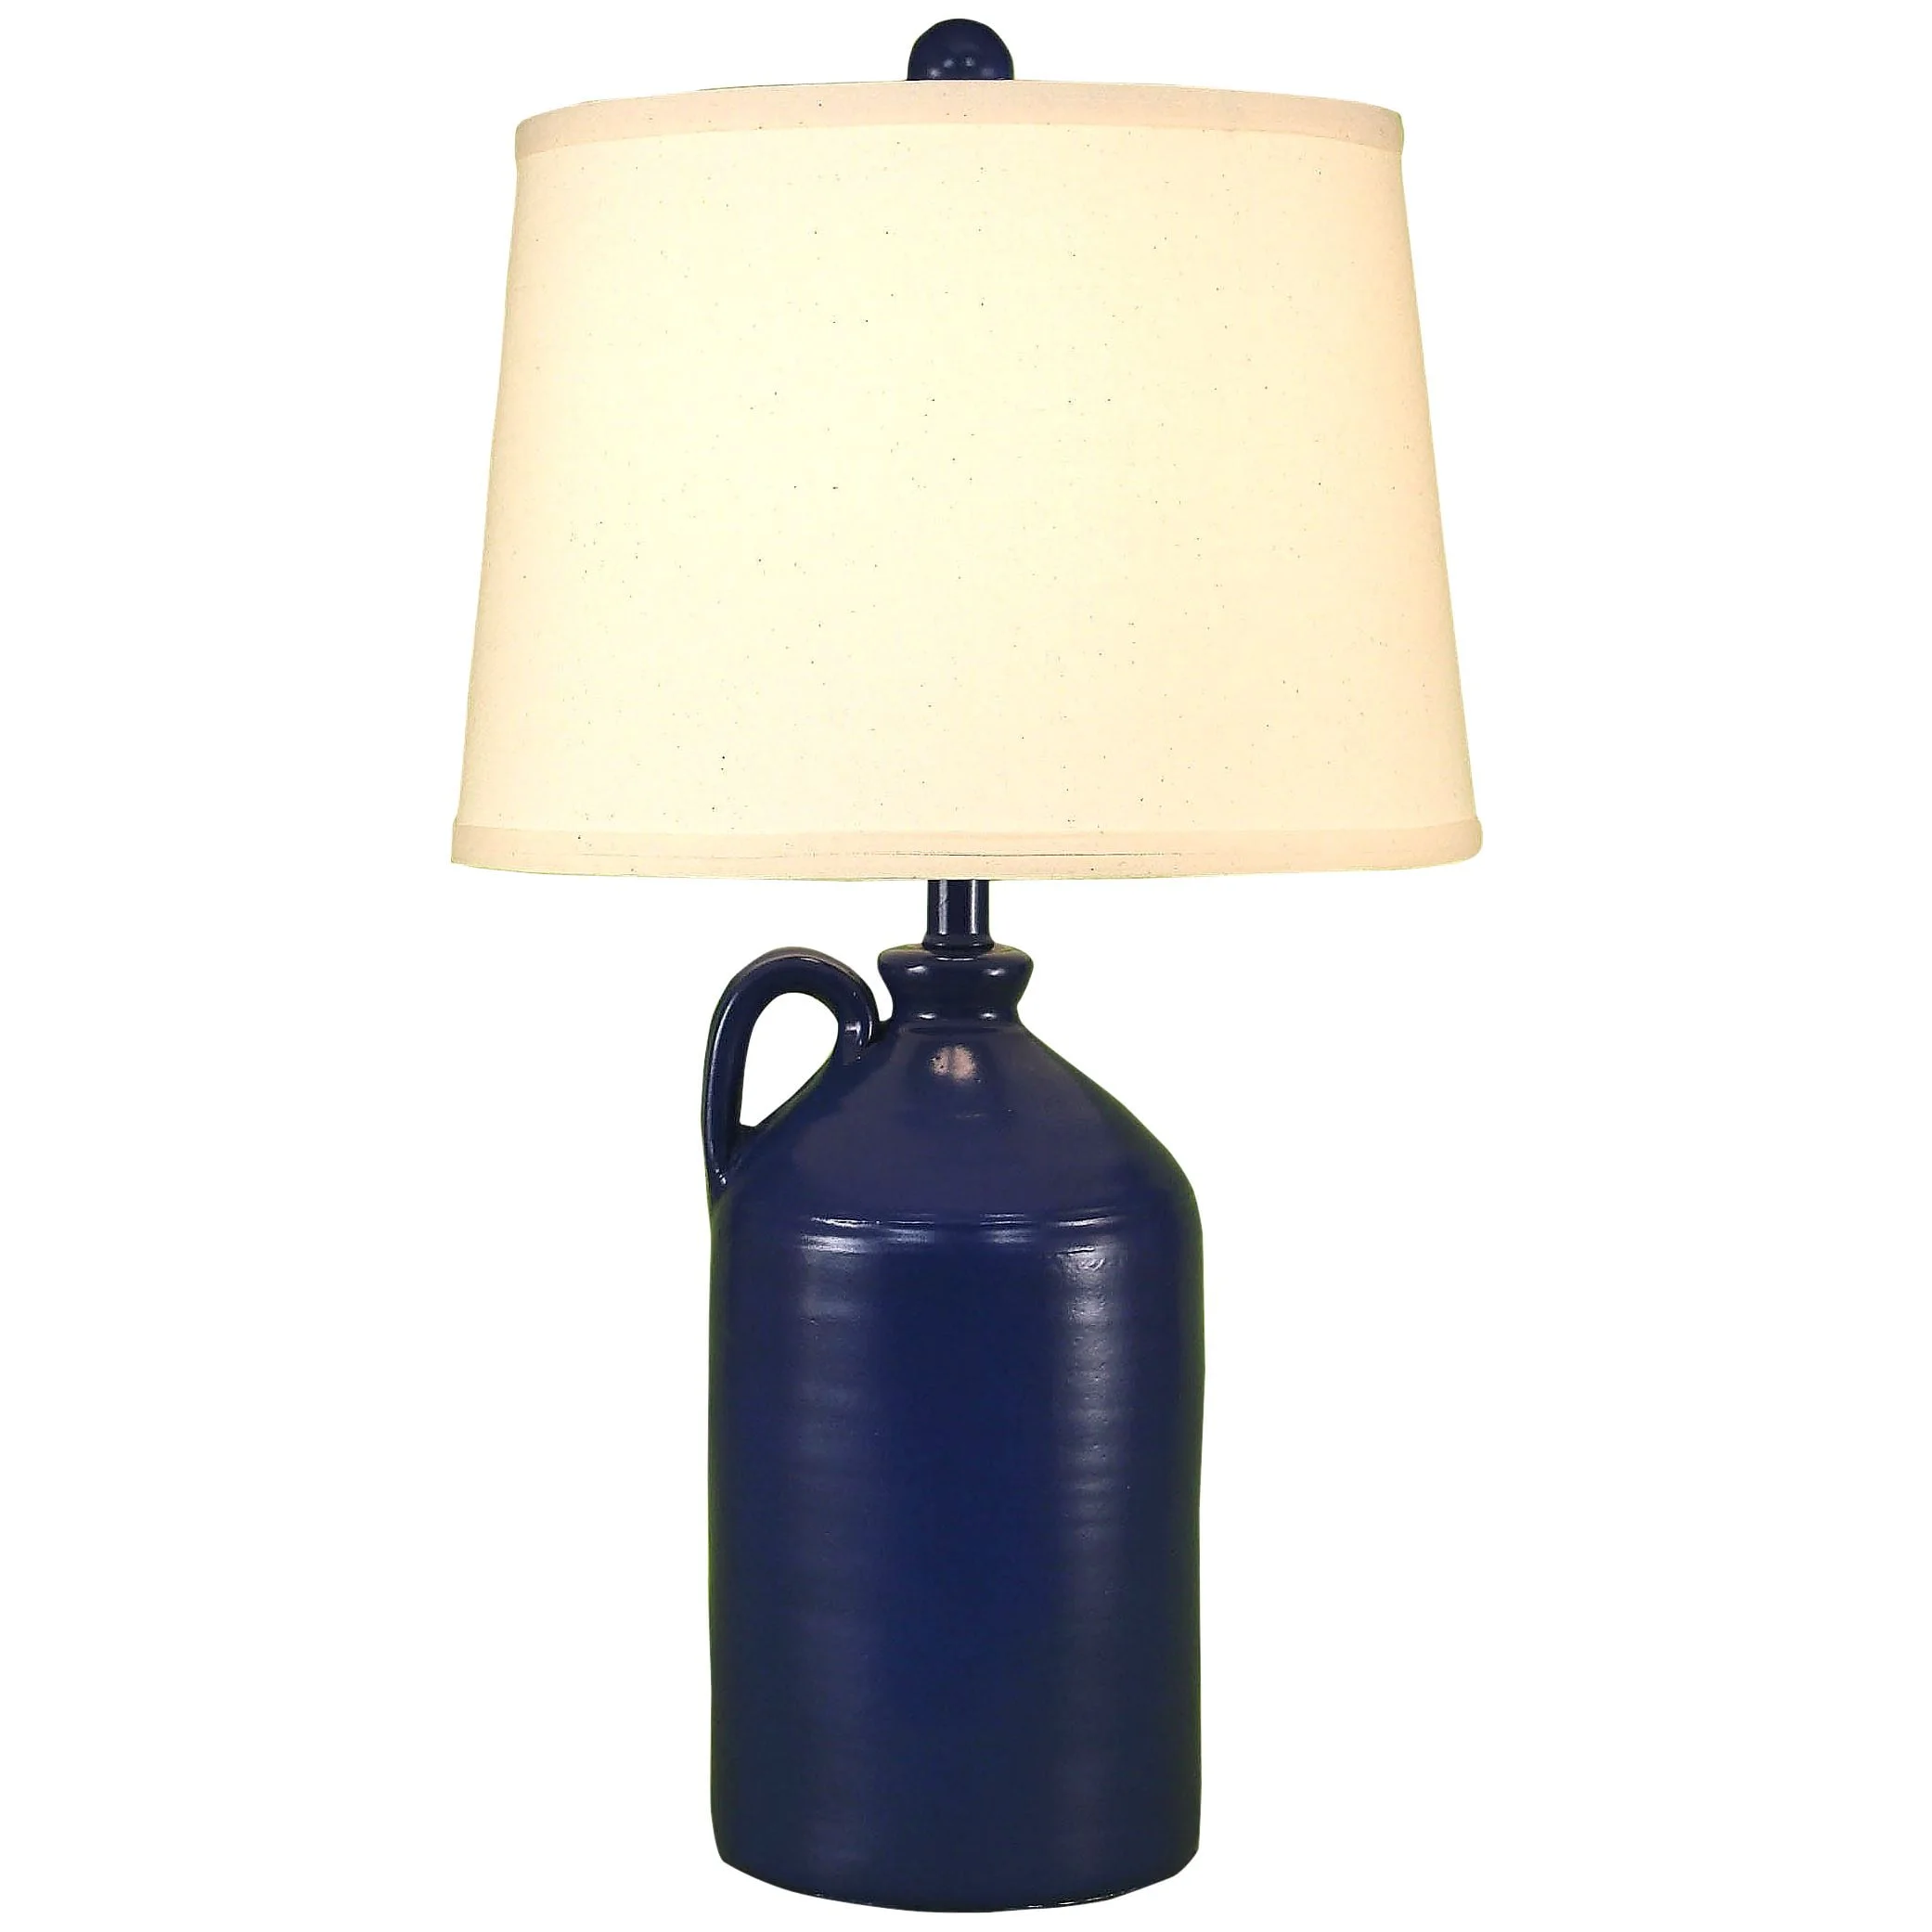 1-Handle Jug Table Lamp